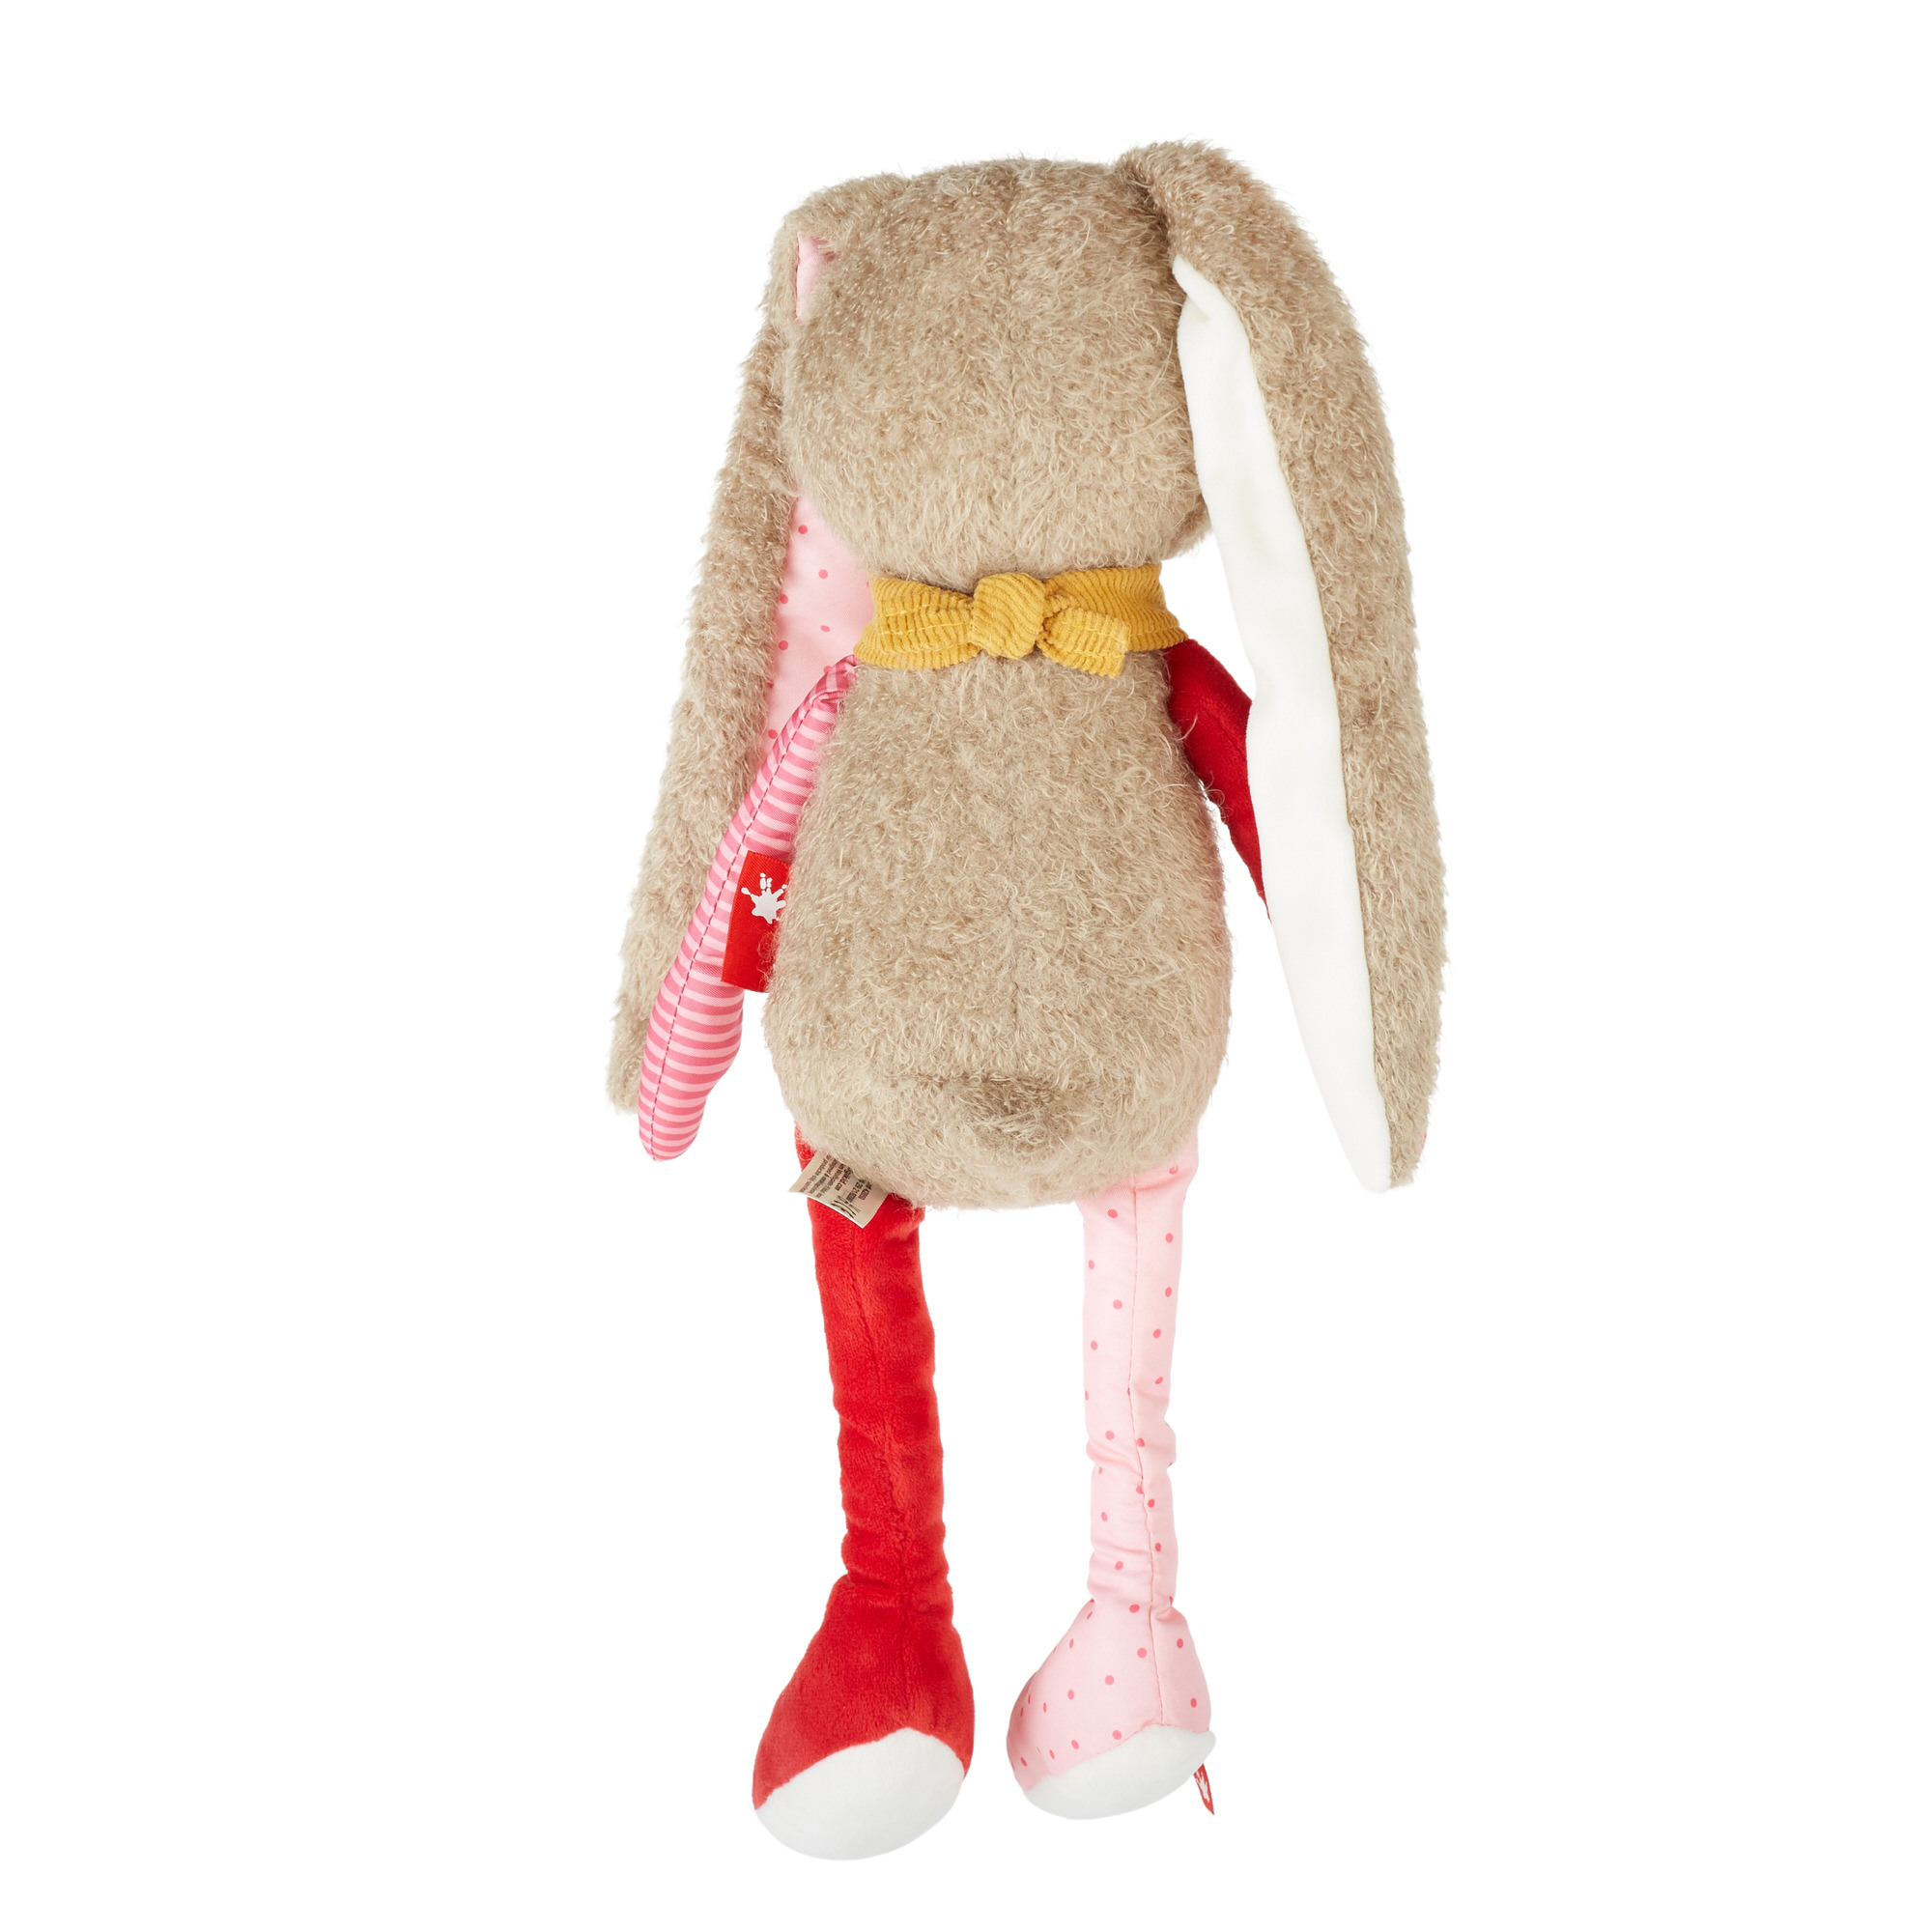 Soft toy rabbit, Patchwork Sweety